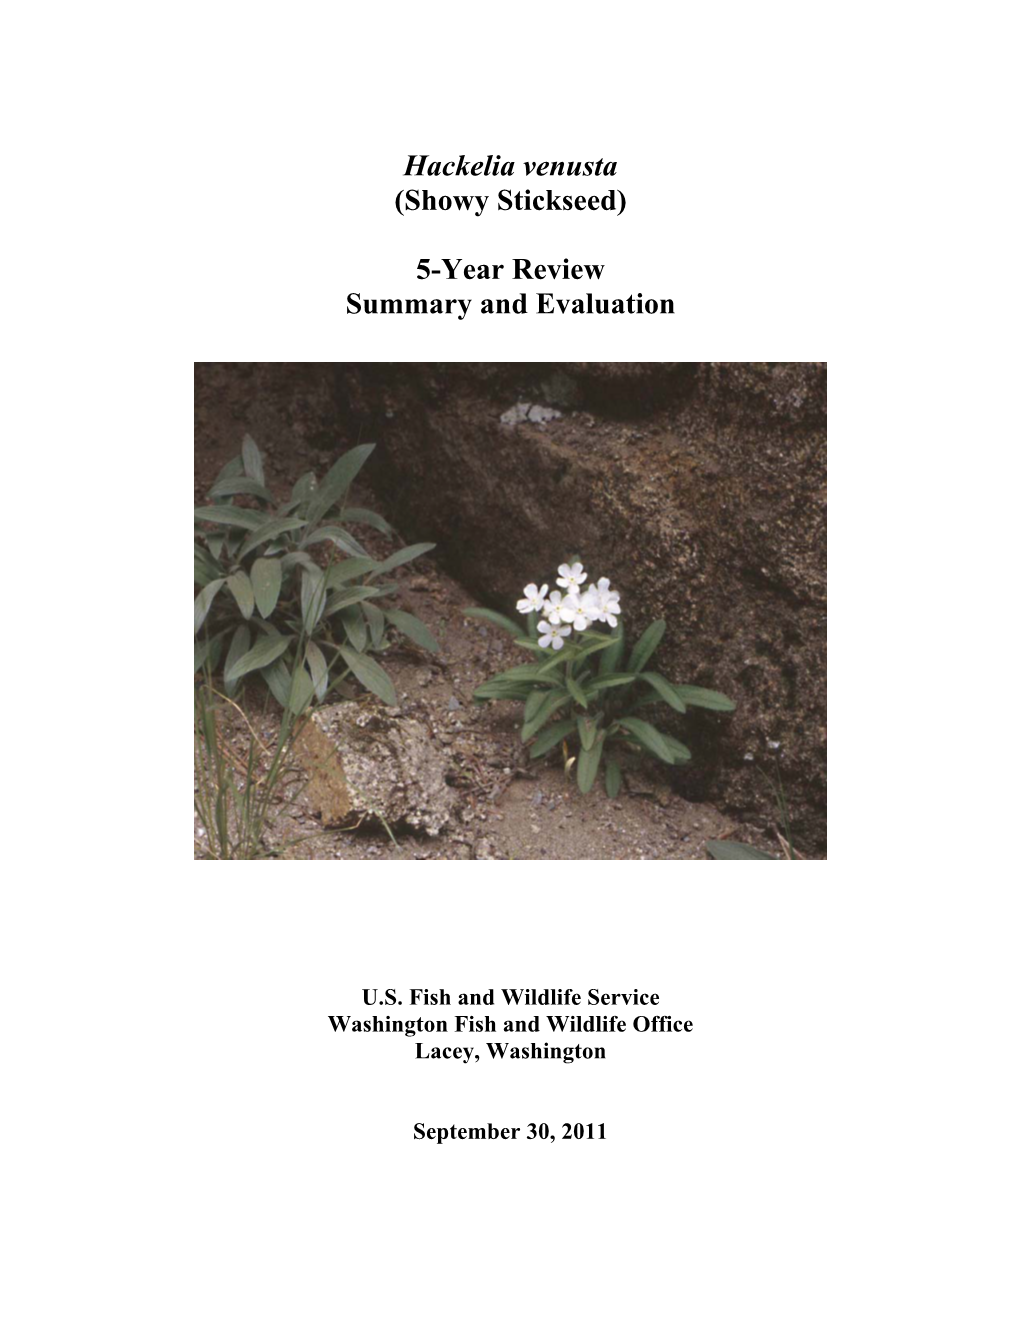 Hackelia Venusta (Showy Stickseed) 5-Year Review Summary and Evaluation